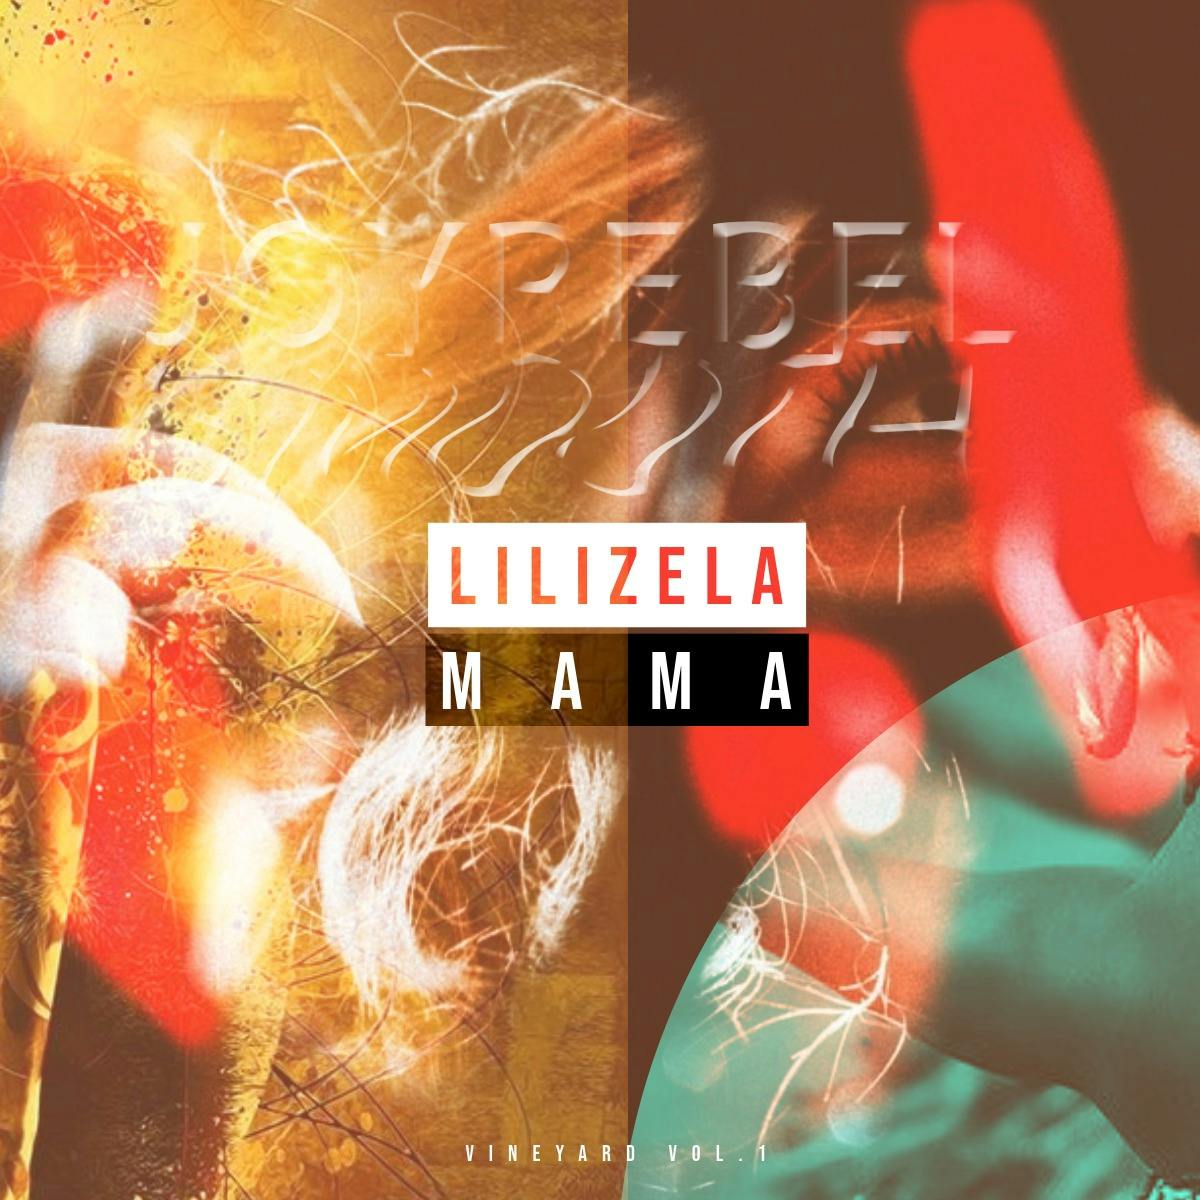 Lilizela Mama